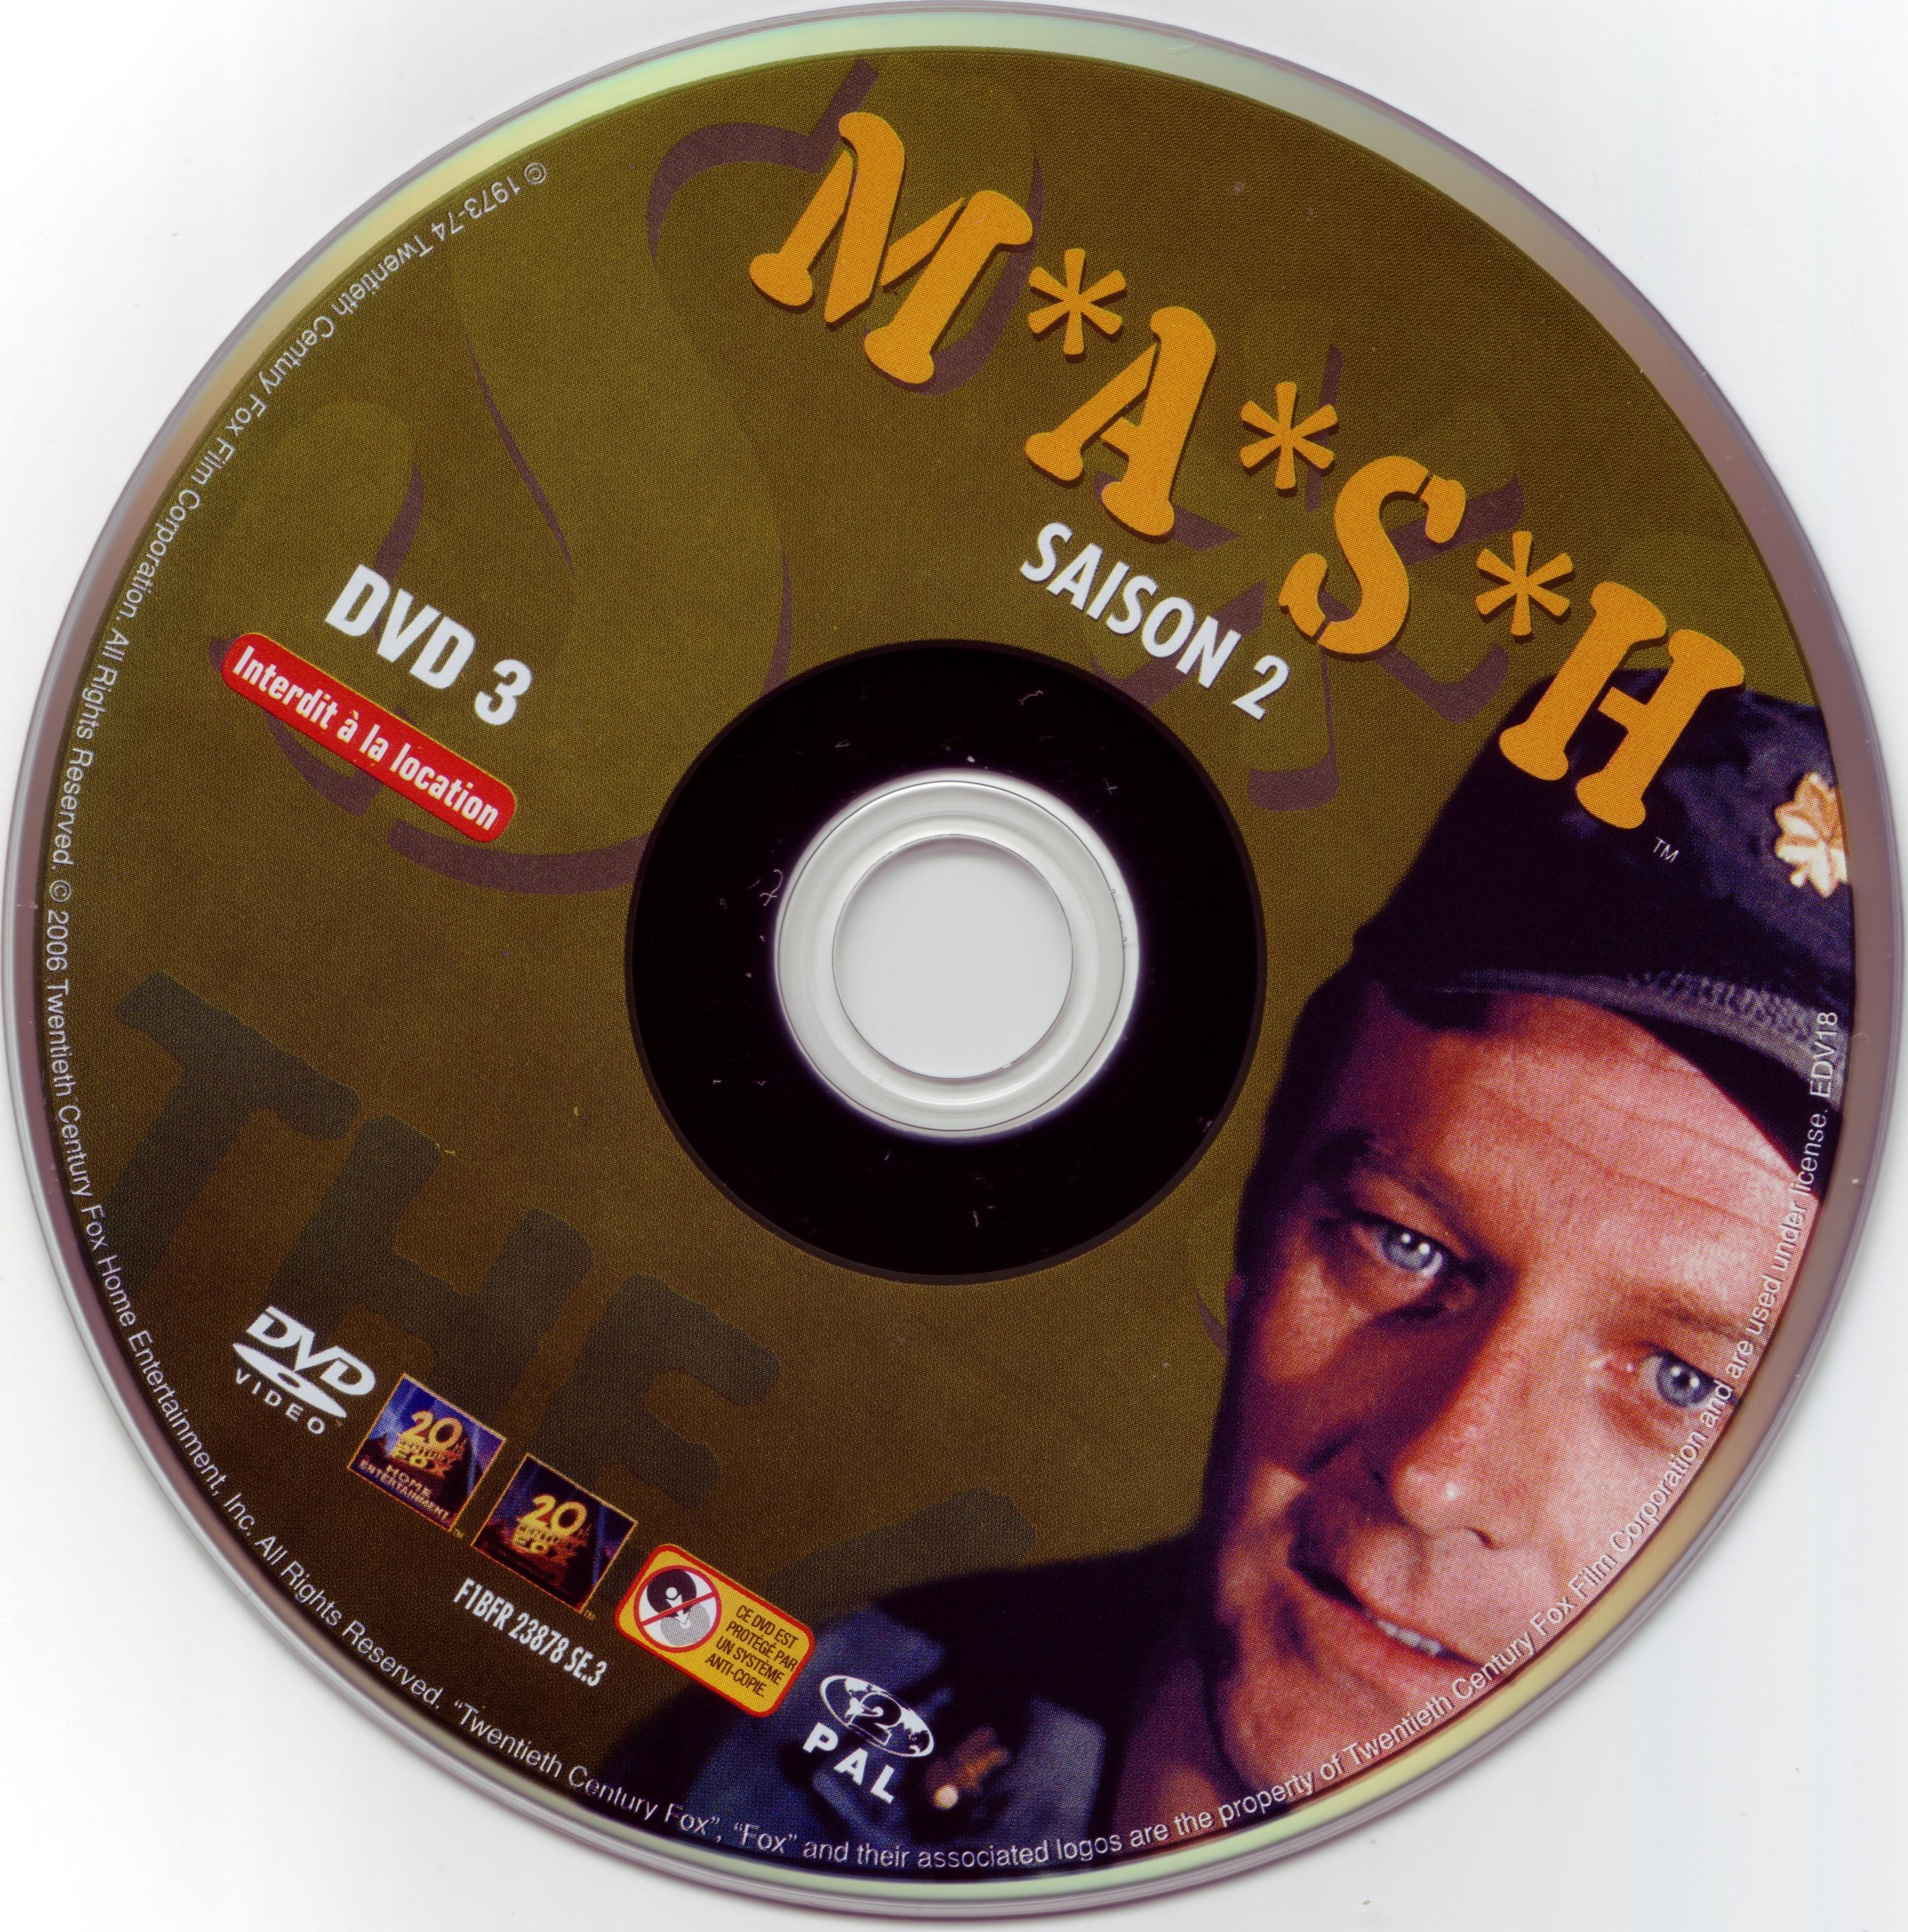 MASH Saison 2 DVD 3